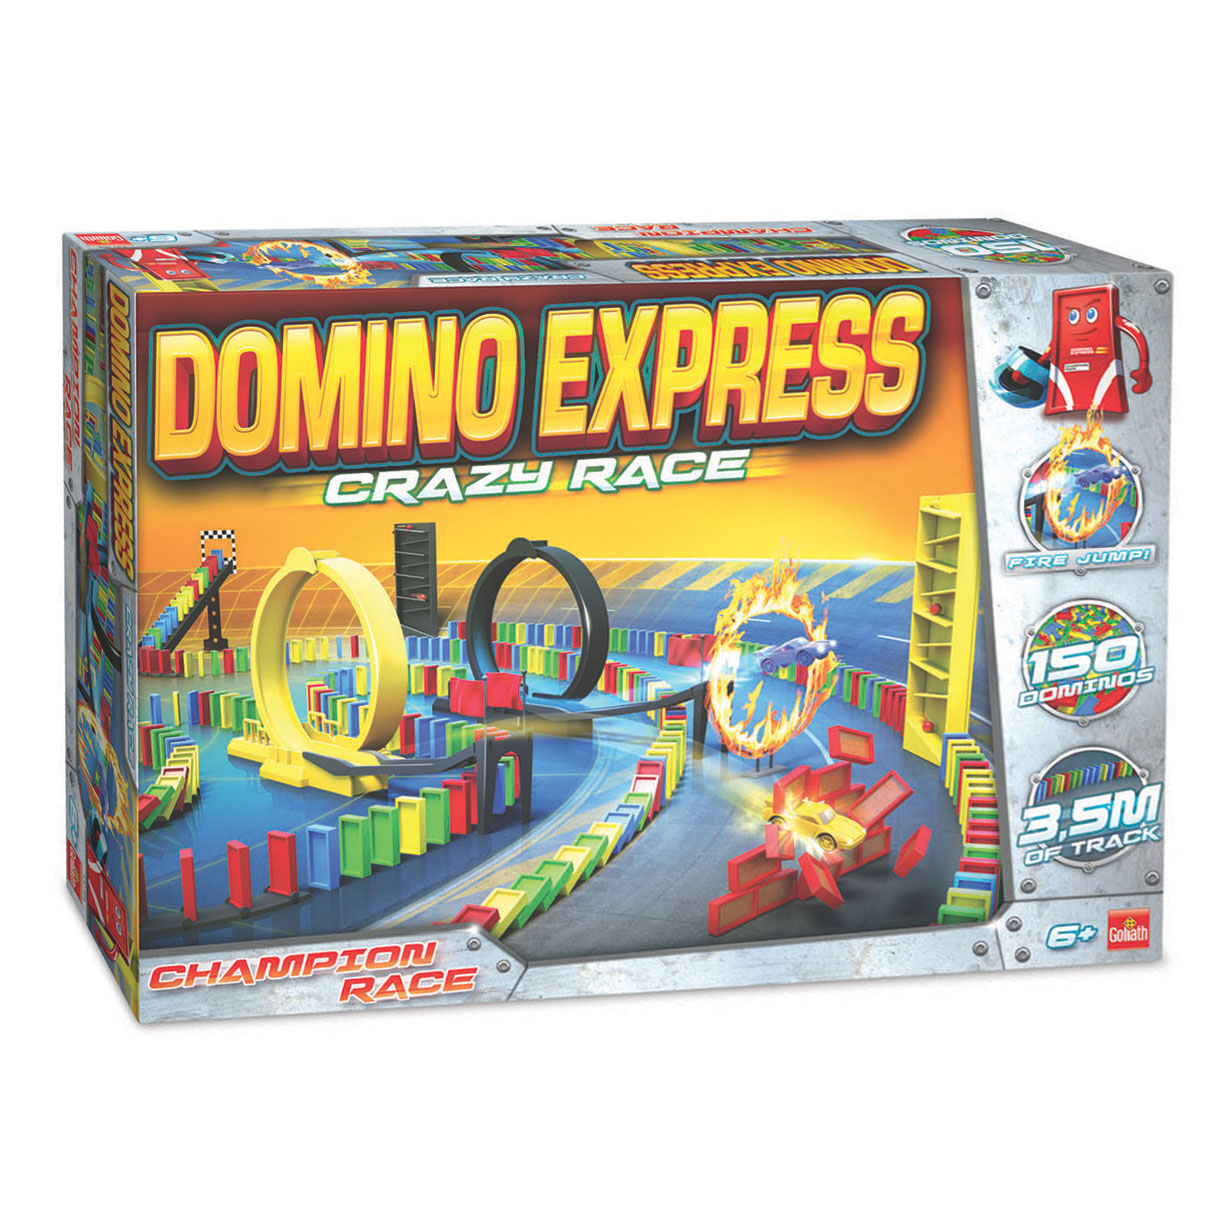 Domino Express Express Express Crazy Race Top Merken Winkel